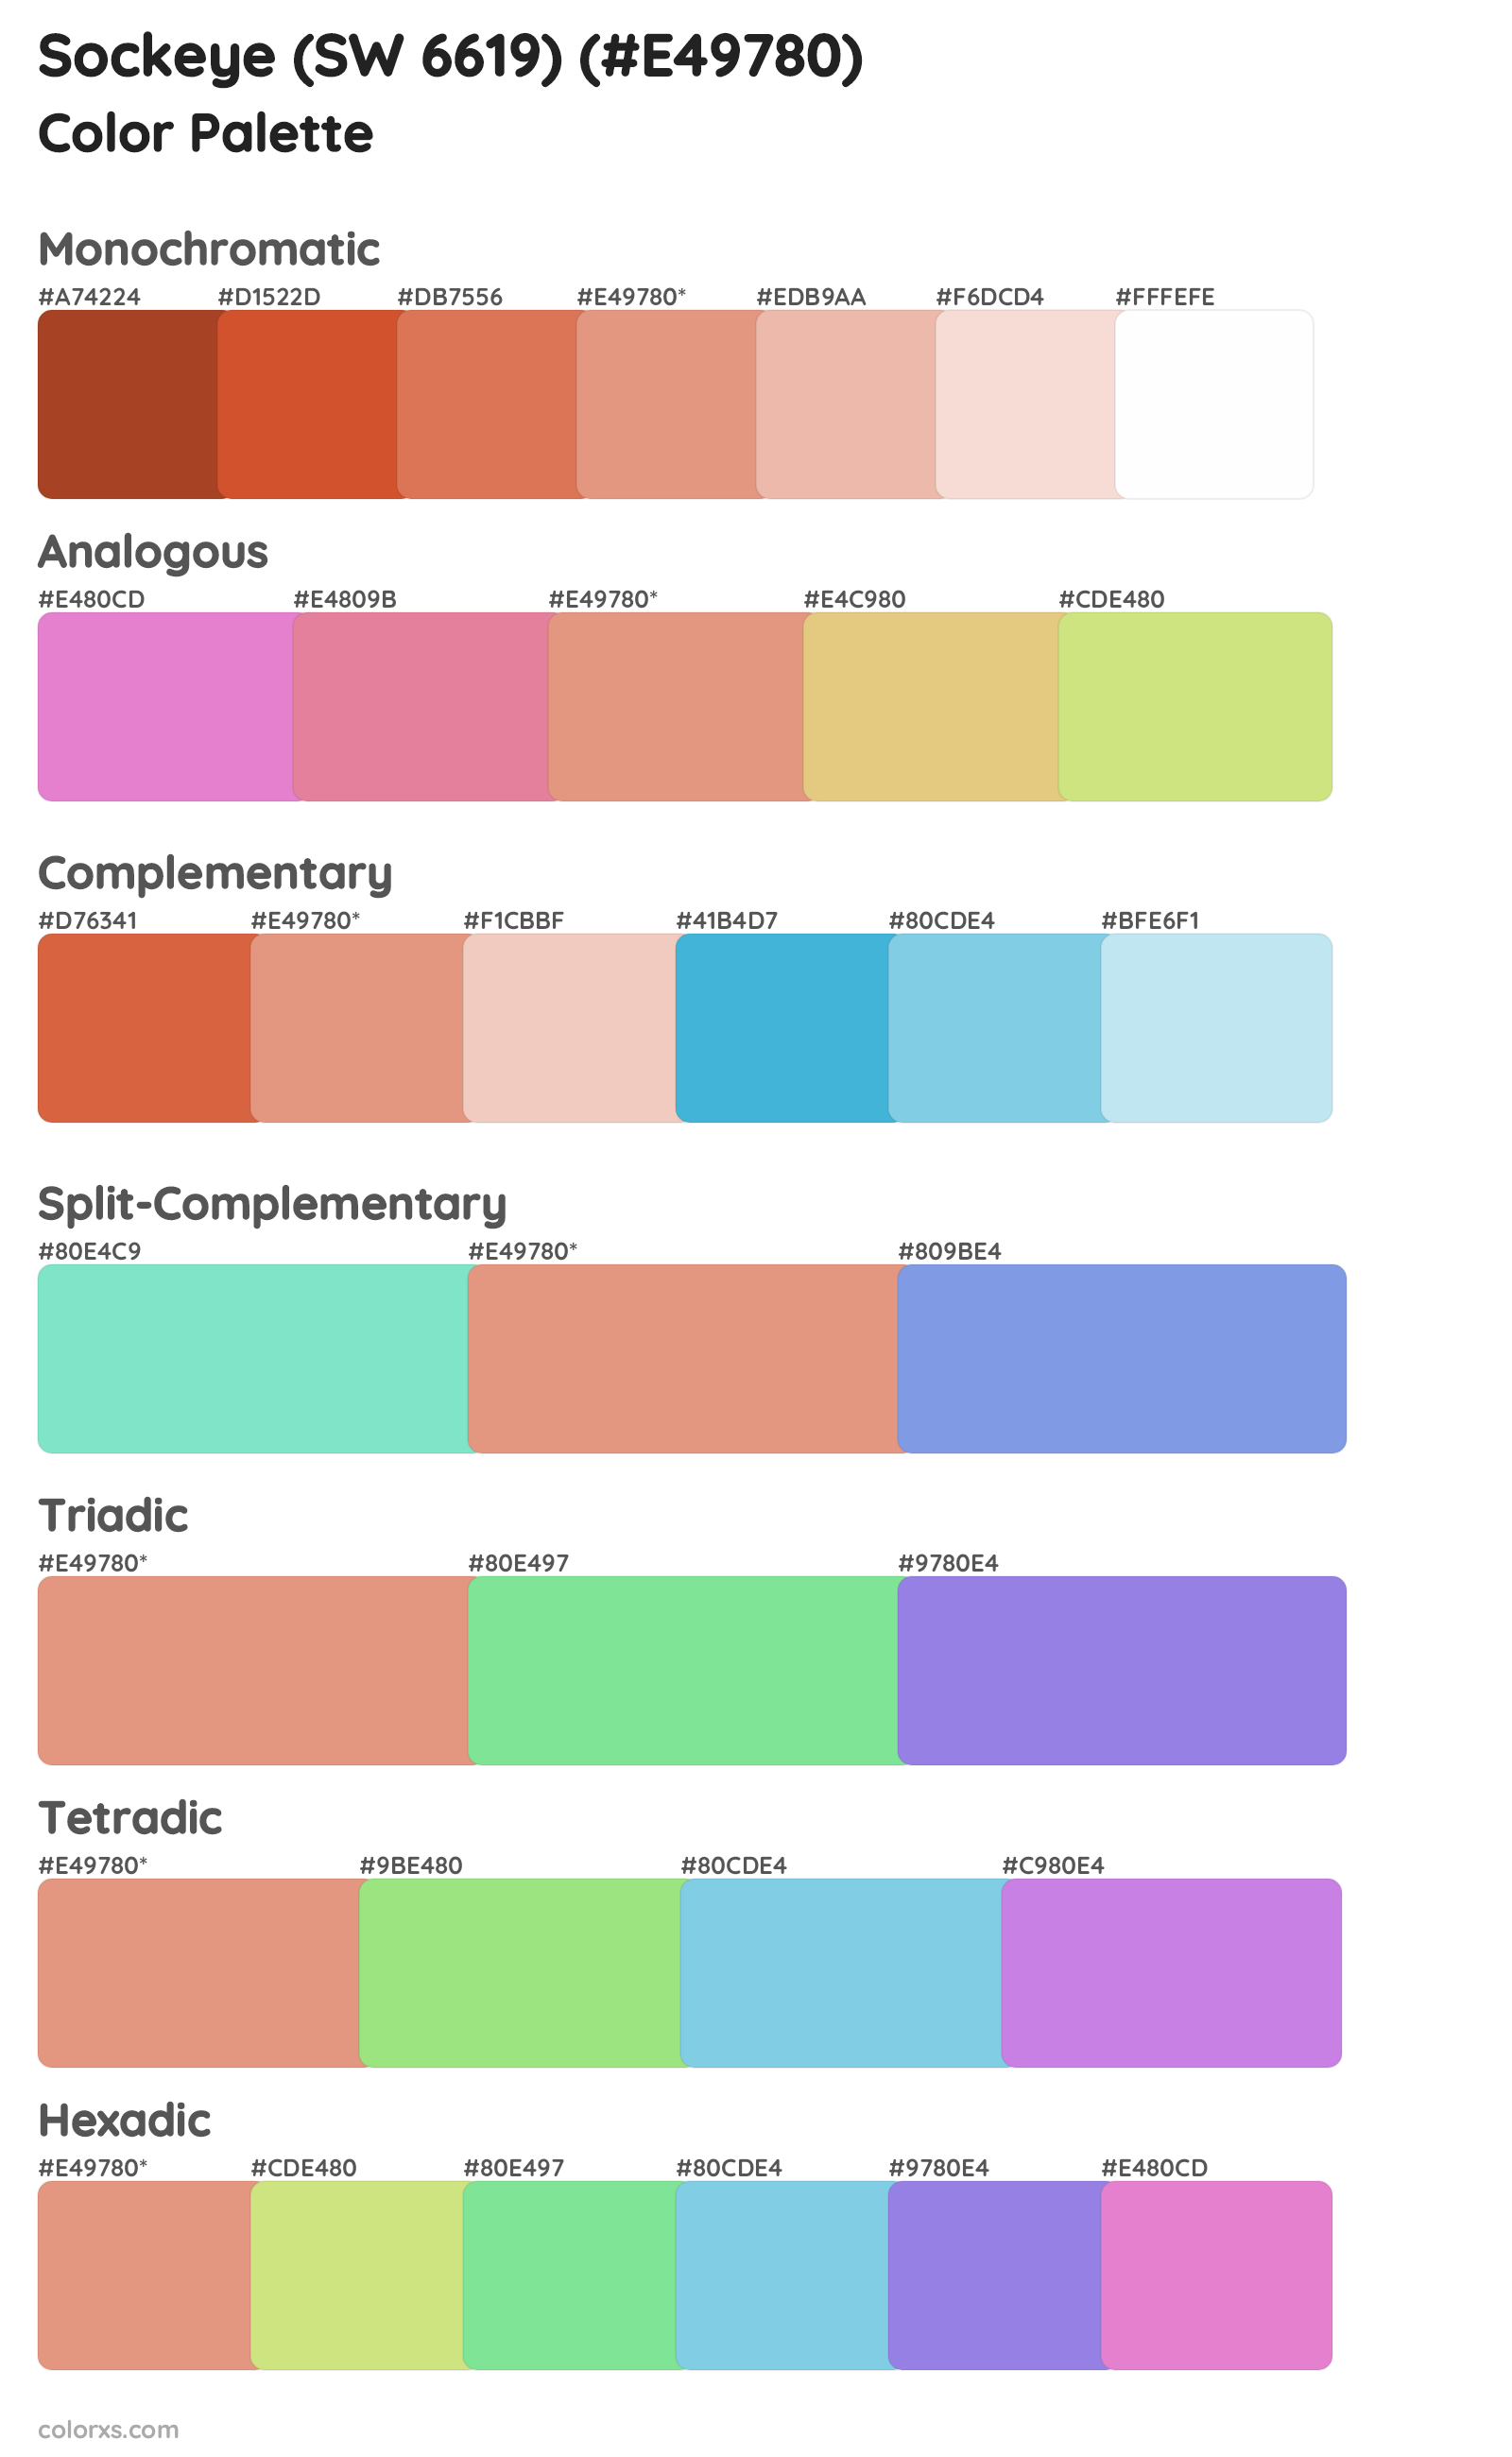 Sockeye (SW 6619) Color Scheme Palettes